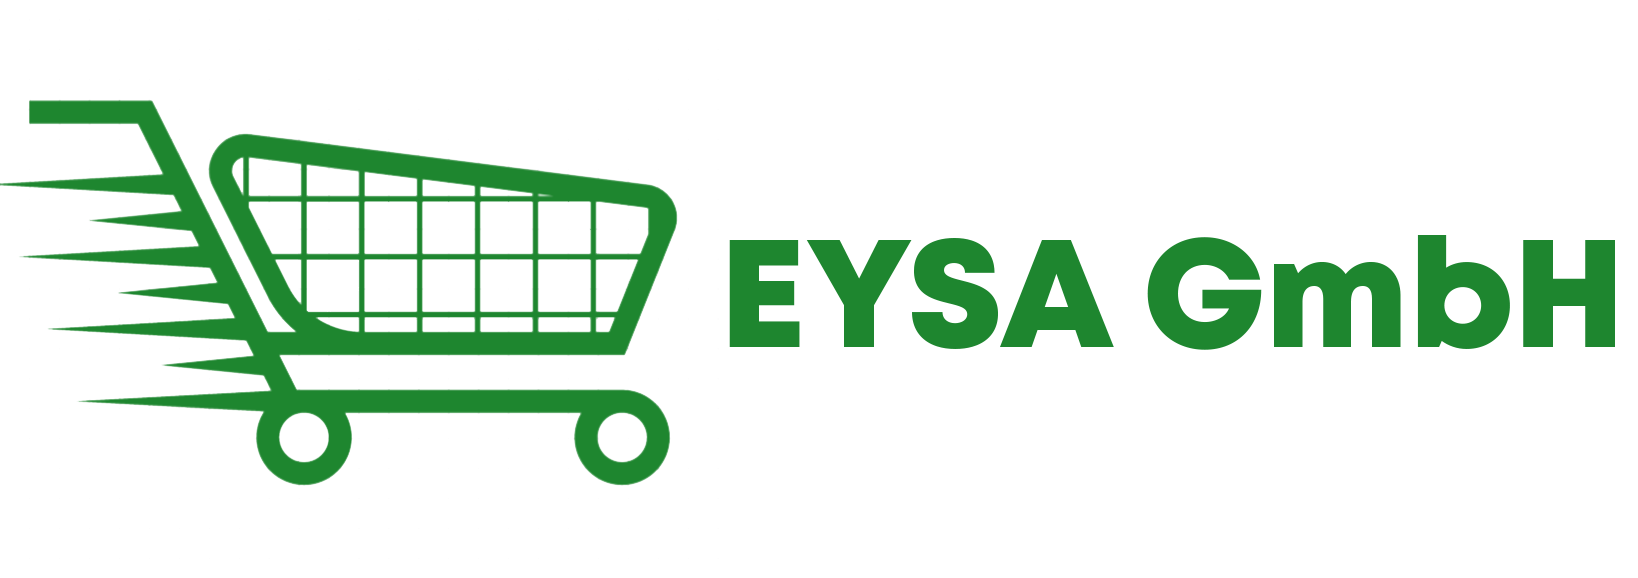 Eysa GmbH